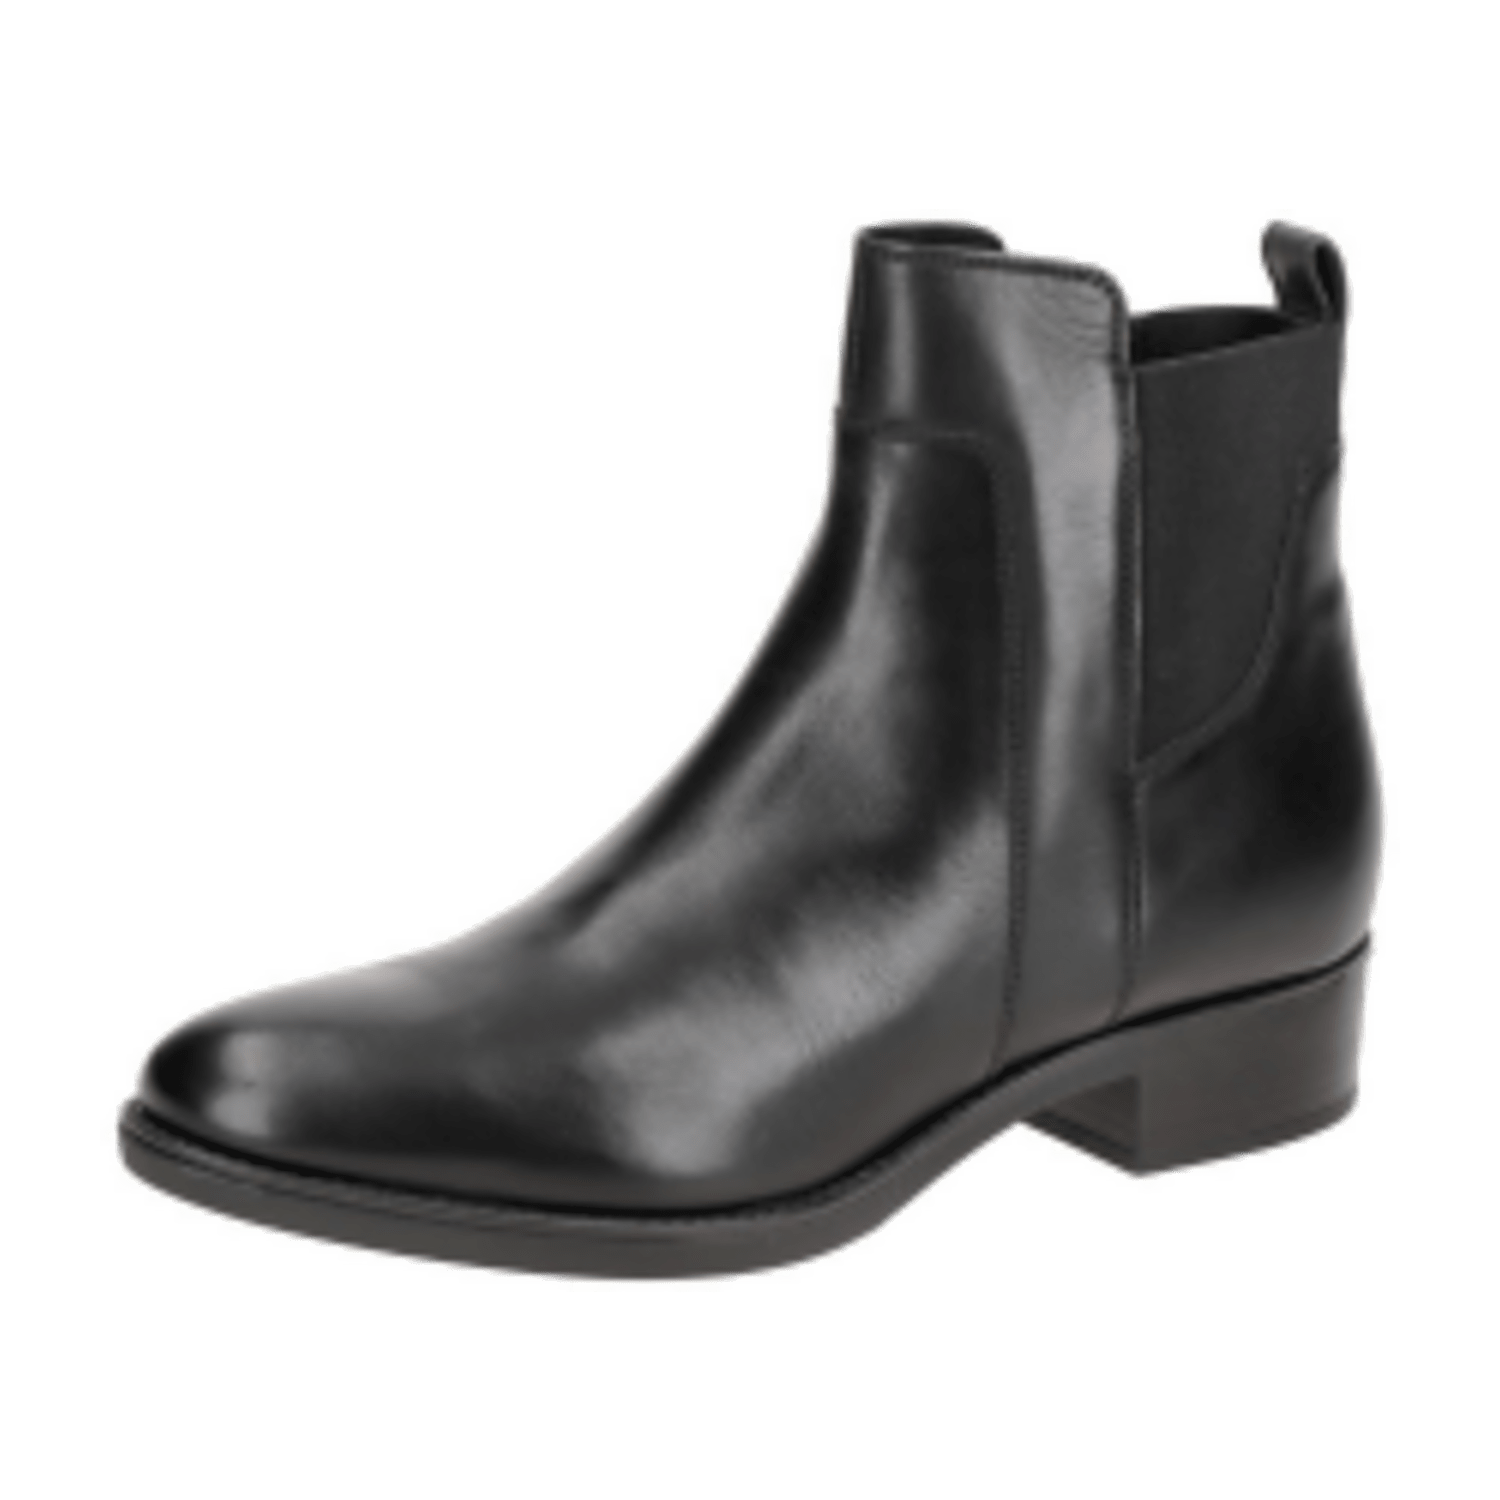 Geox Felicity Stiefelette Ankle Boots schwarz D94G1G